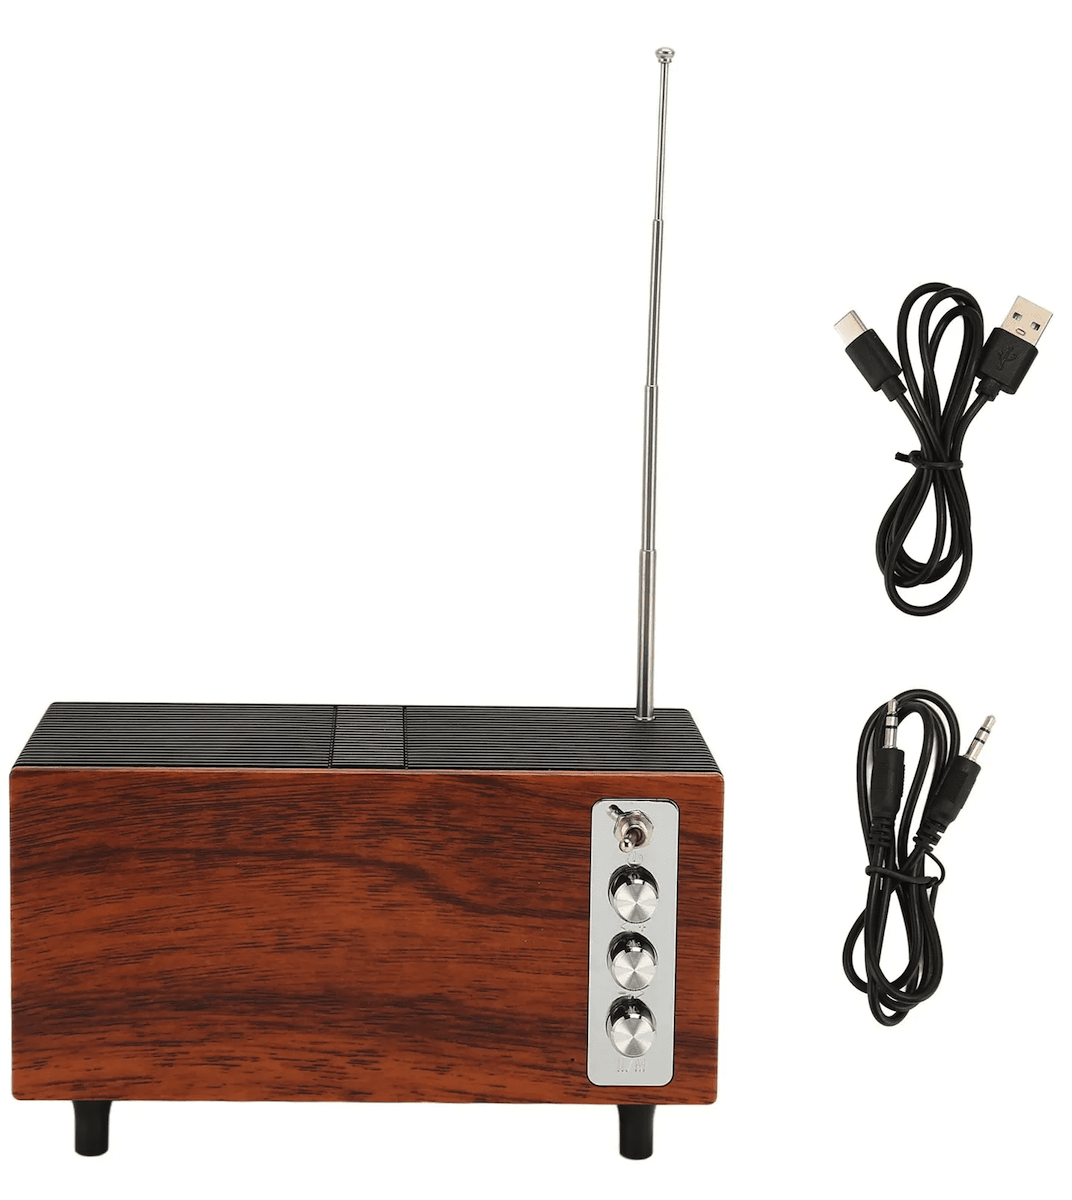 bluetooth wireless retro radio receiver made of wood small